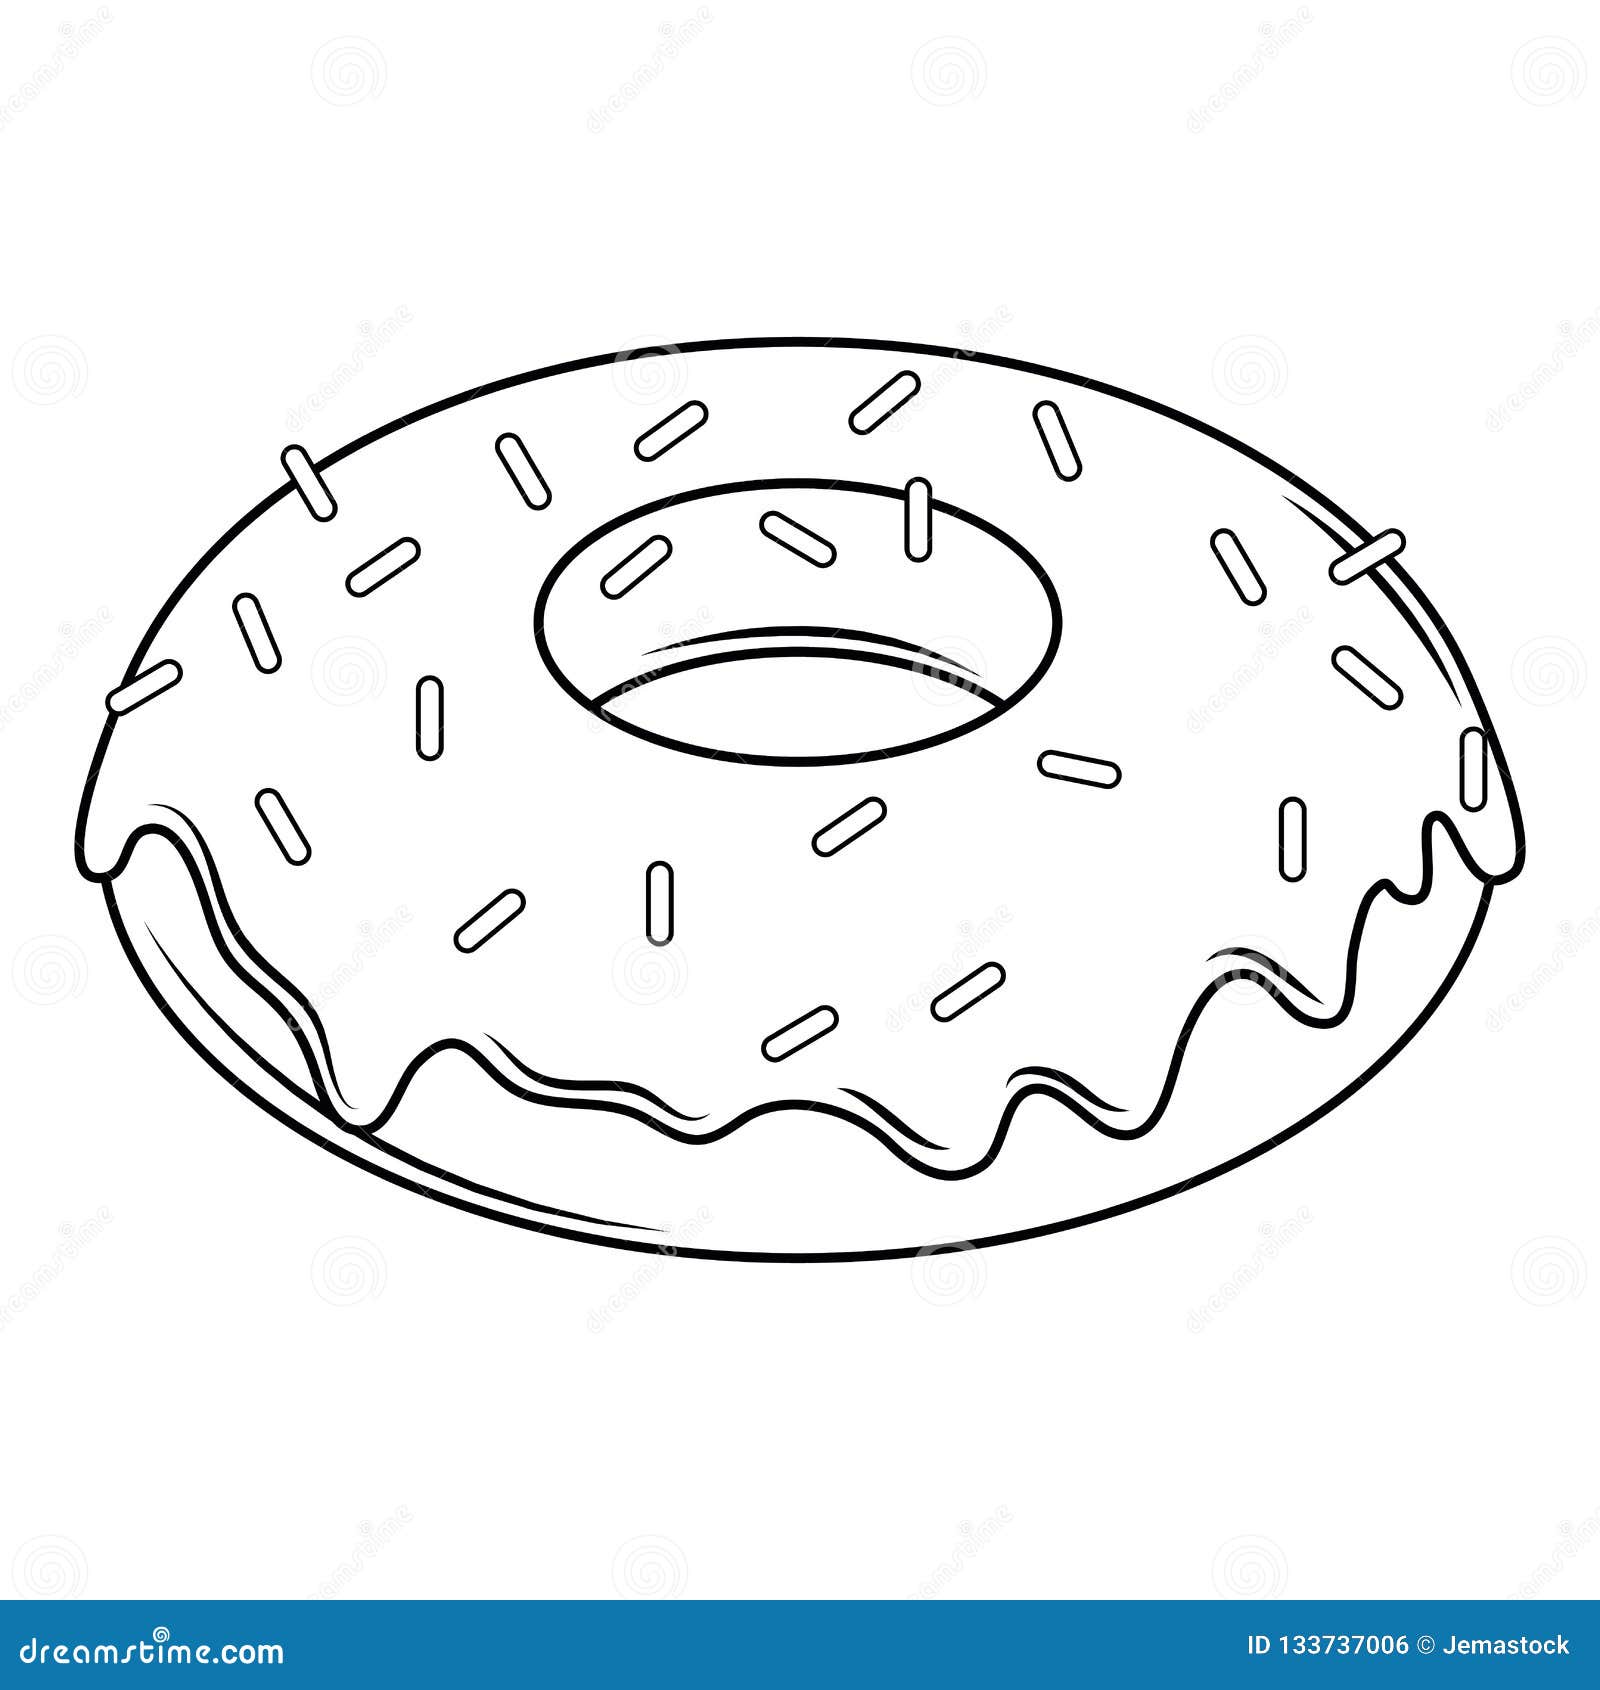 Donut dessert cartoons stock vector. Illustration of dough - 133737006